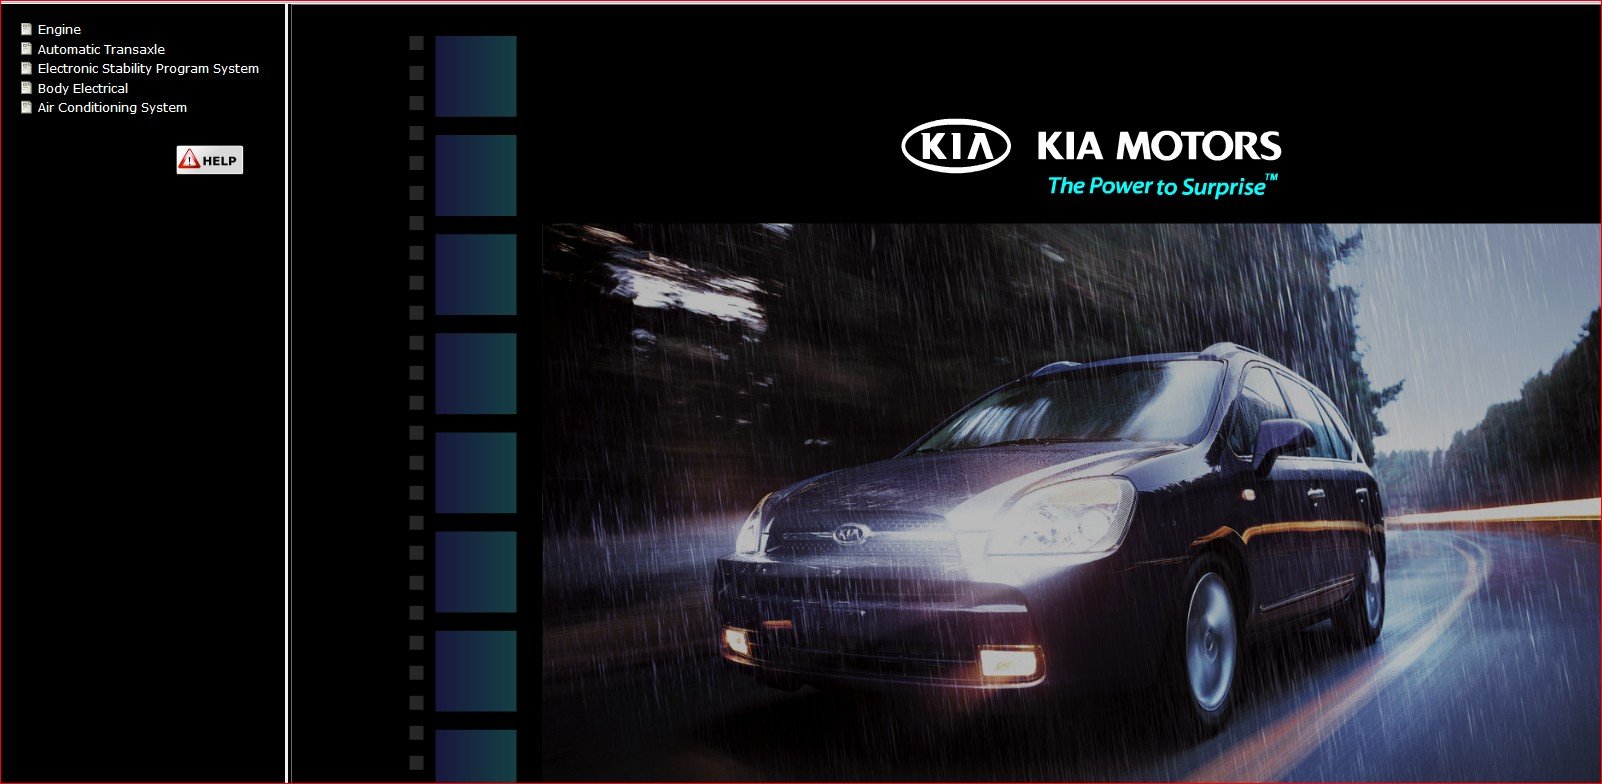 2006 Kia Carens Complete Service Manual Download